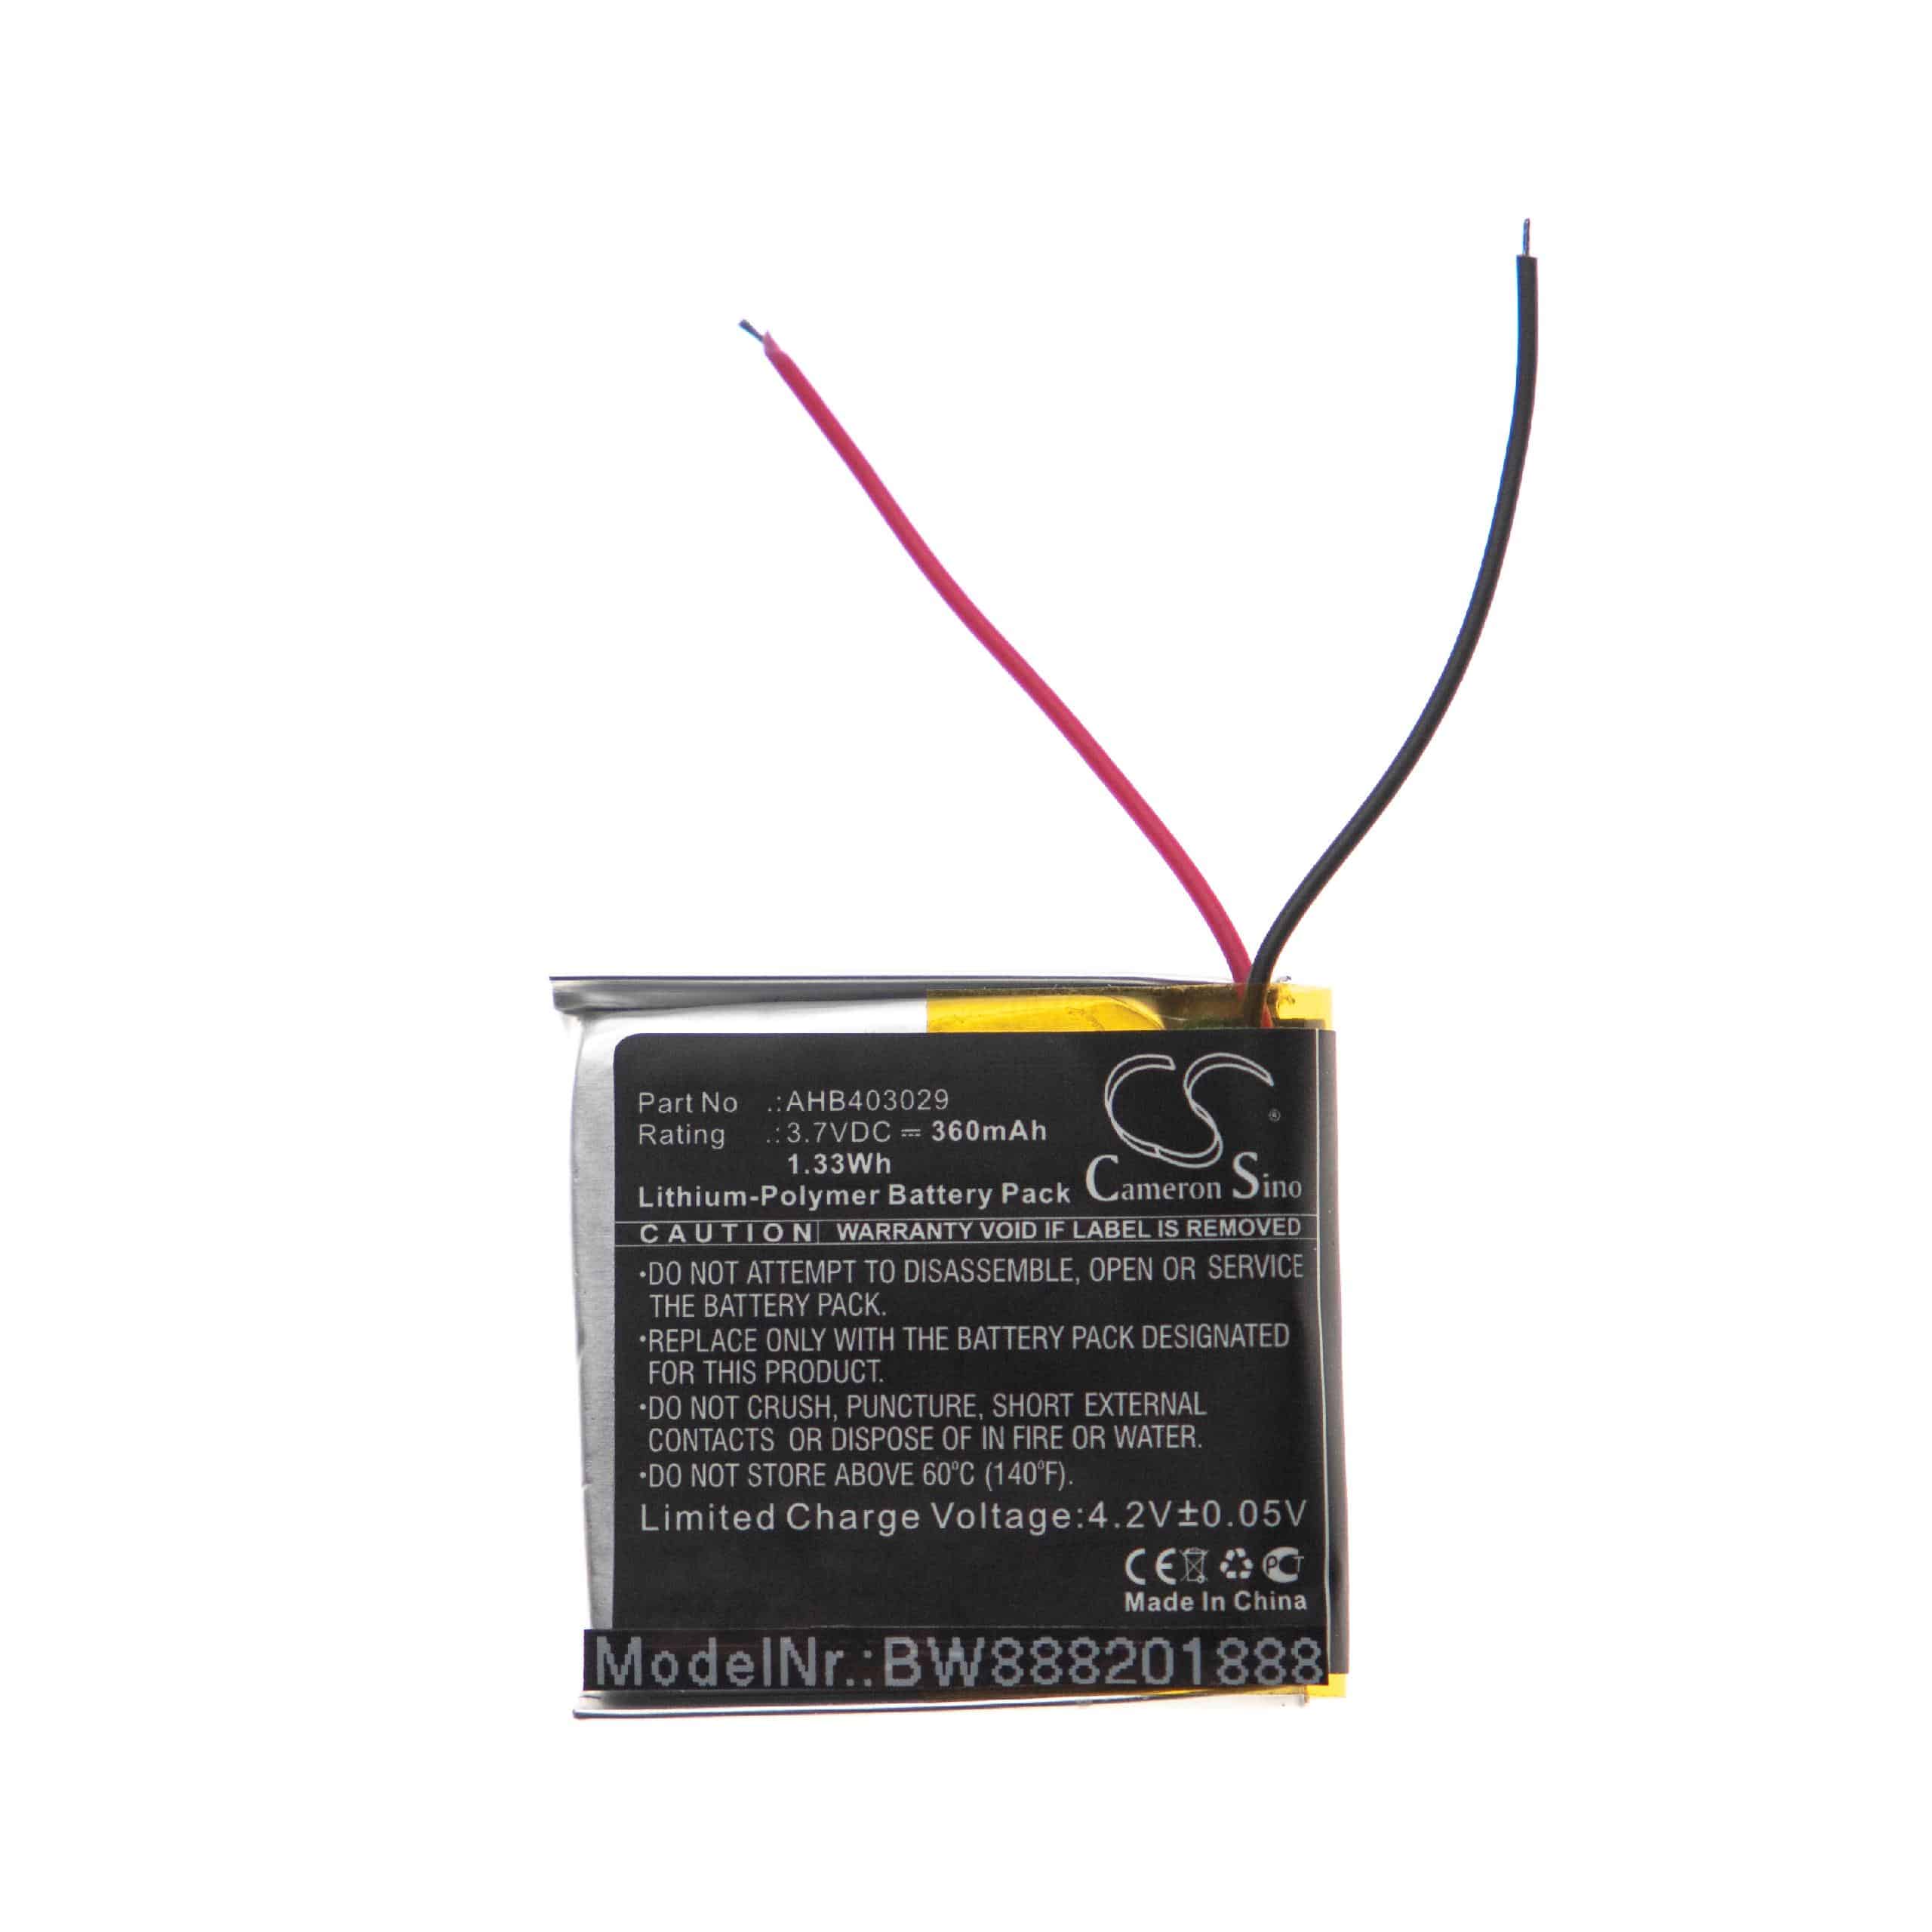 Wireless Headset Battery Replacement for Plantronics AHB403029 - 360mAh 3.7V Li-polymer